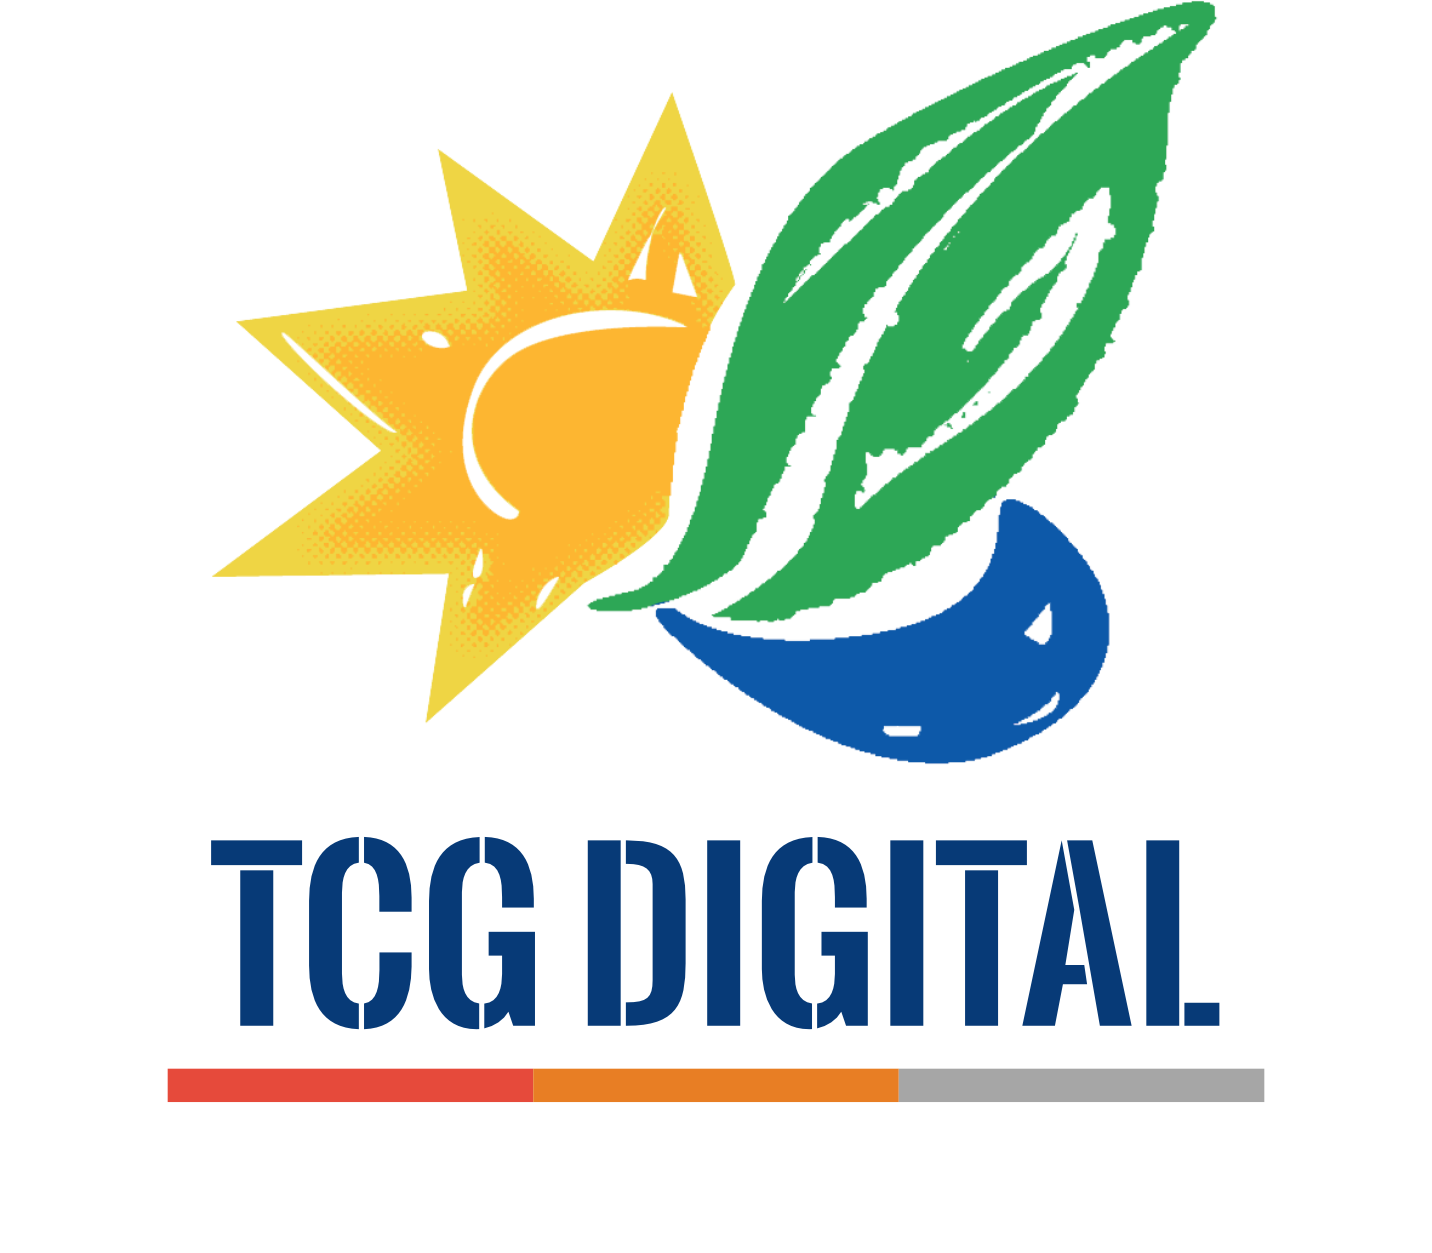 TCG Digital